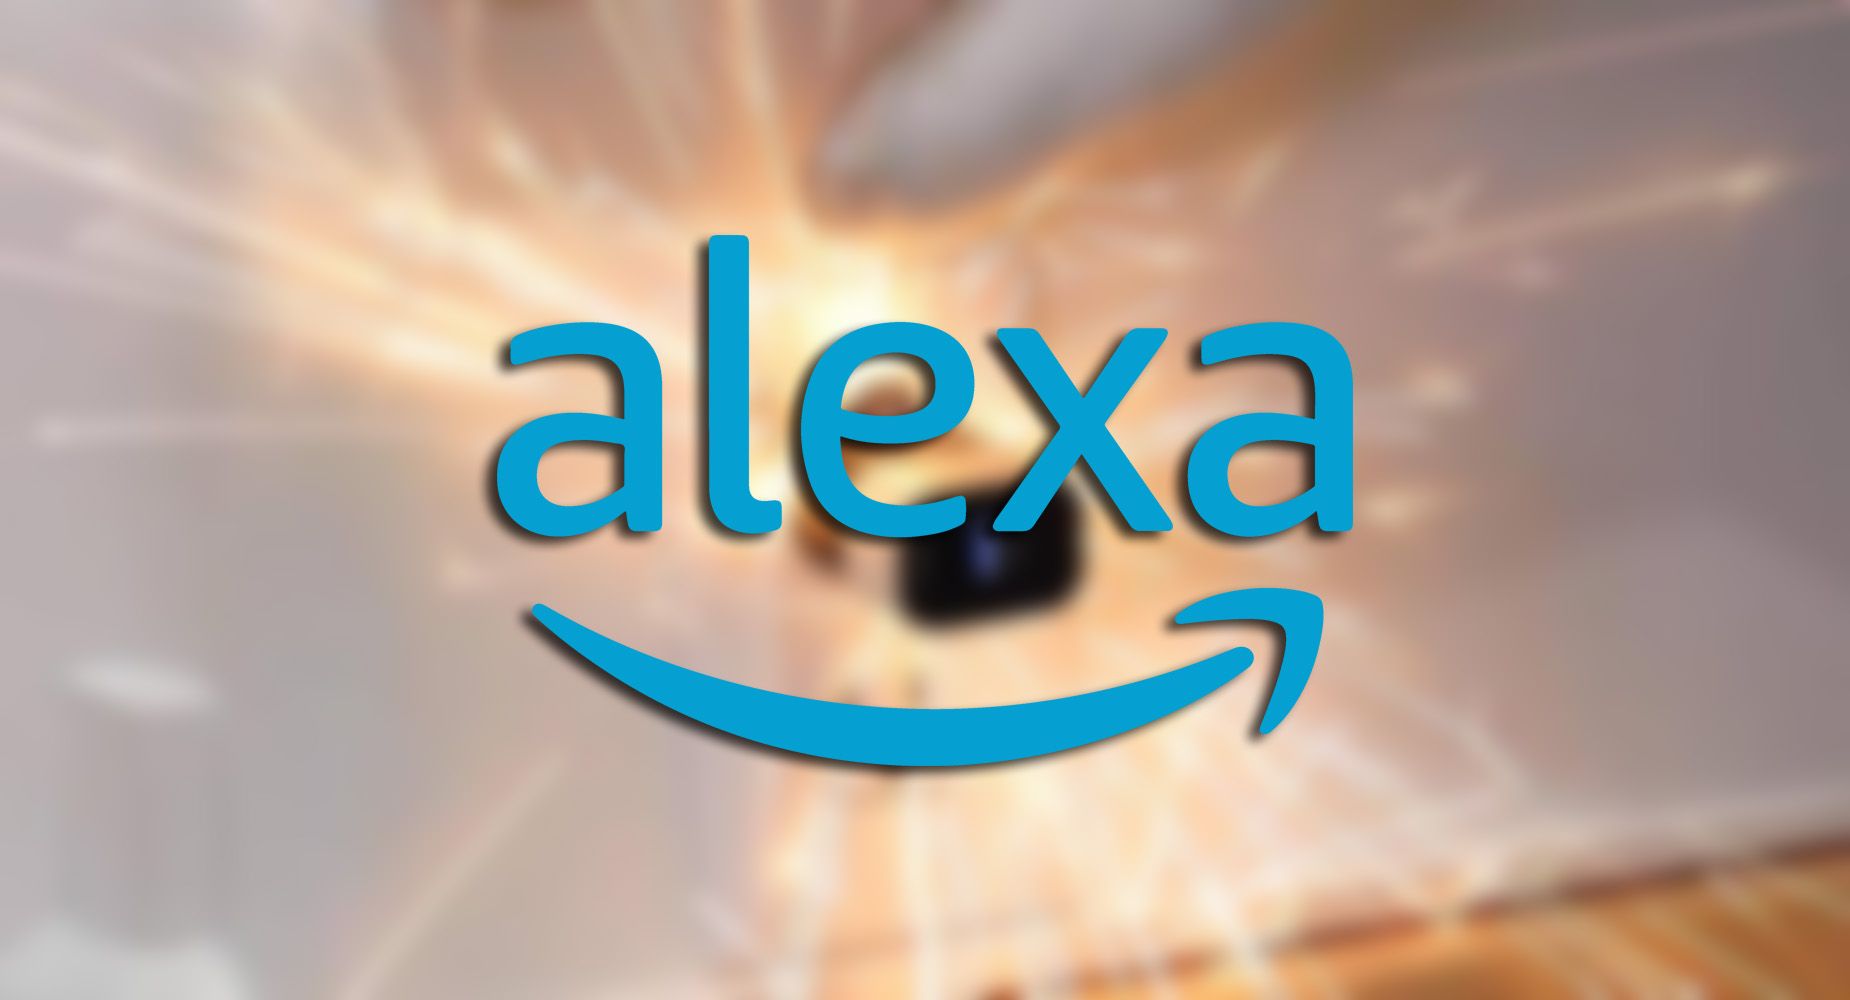 The Amazon Alexa logo against a blurred image.